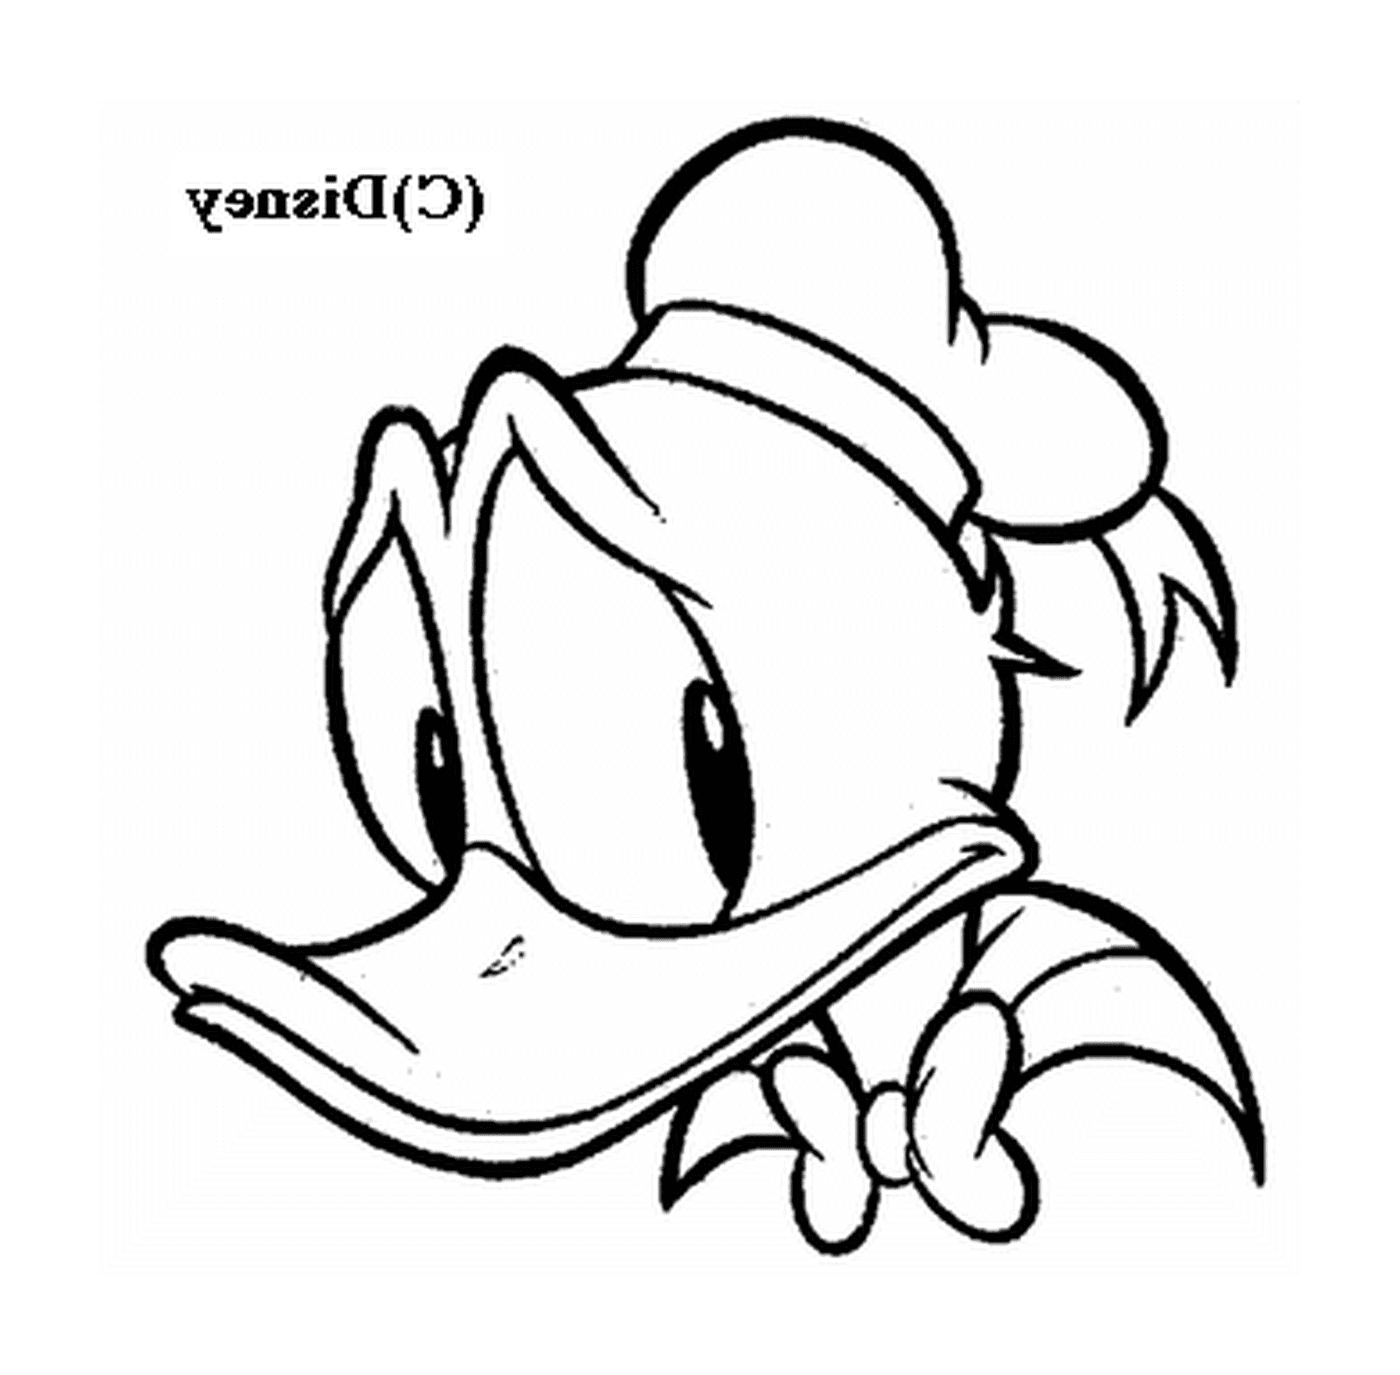  Donald's expressive head 